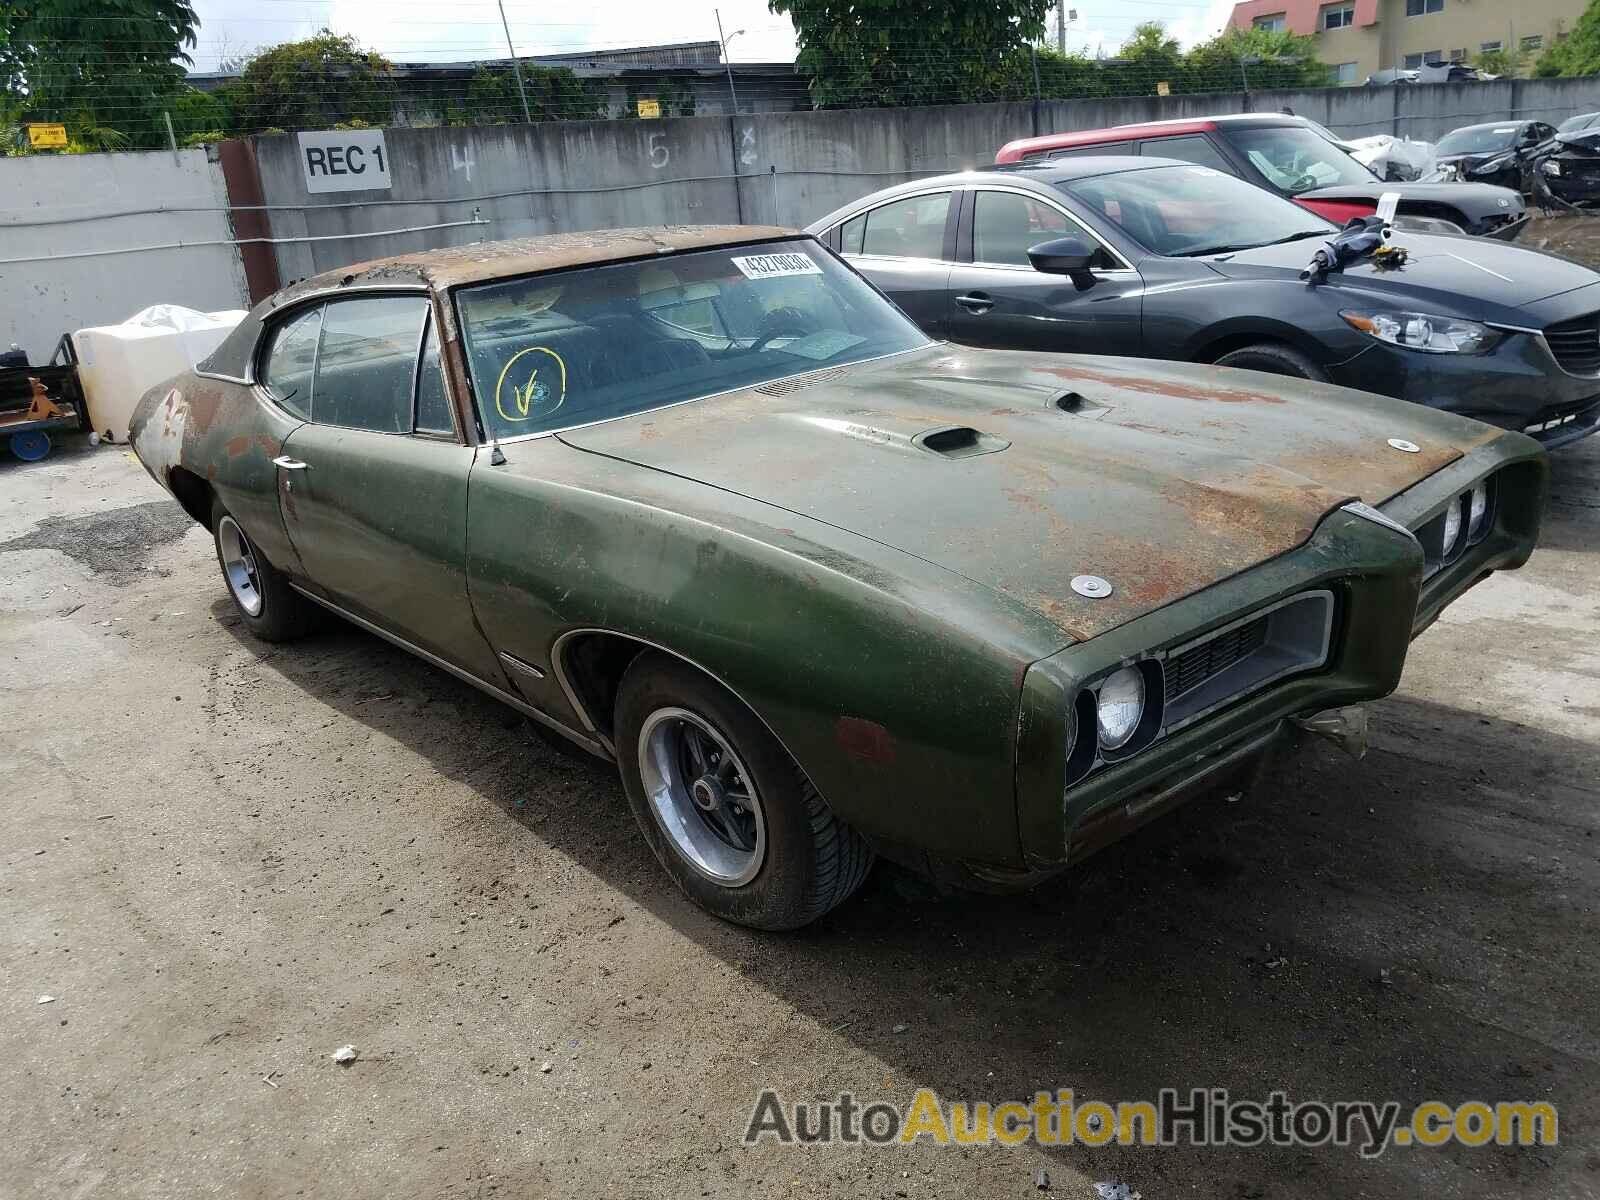 1968 PONTIAC GTO, 242378R162801